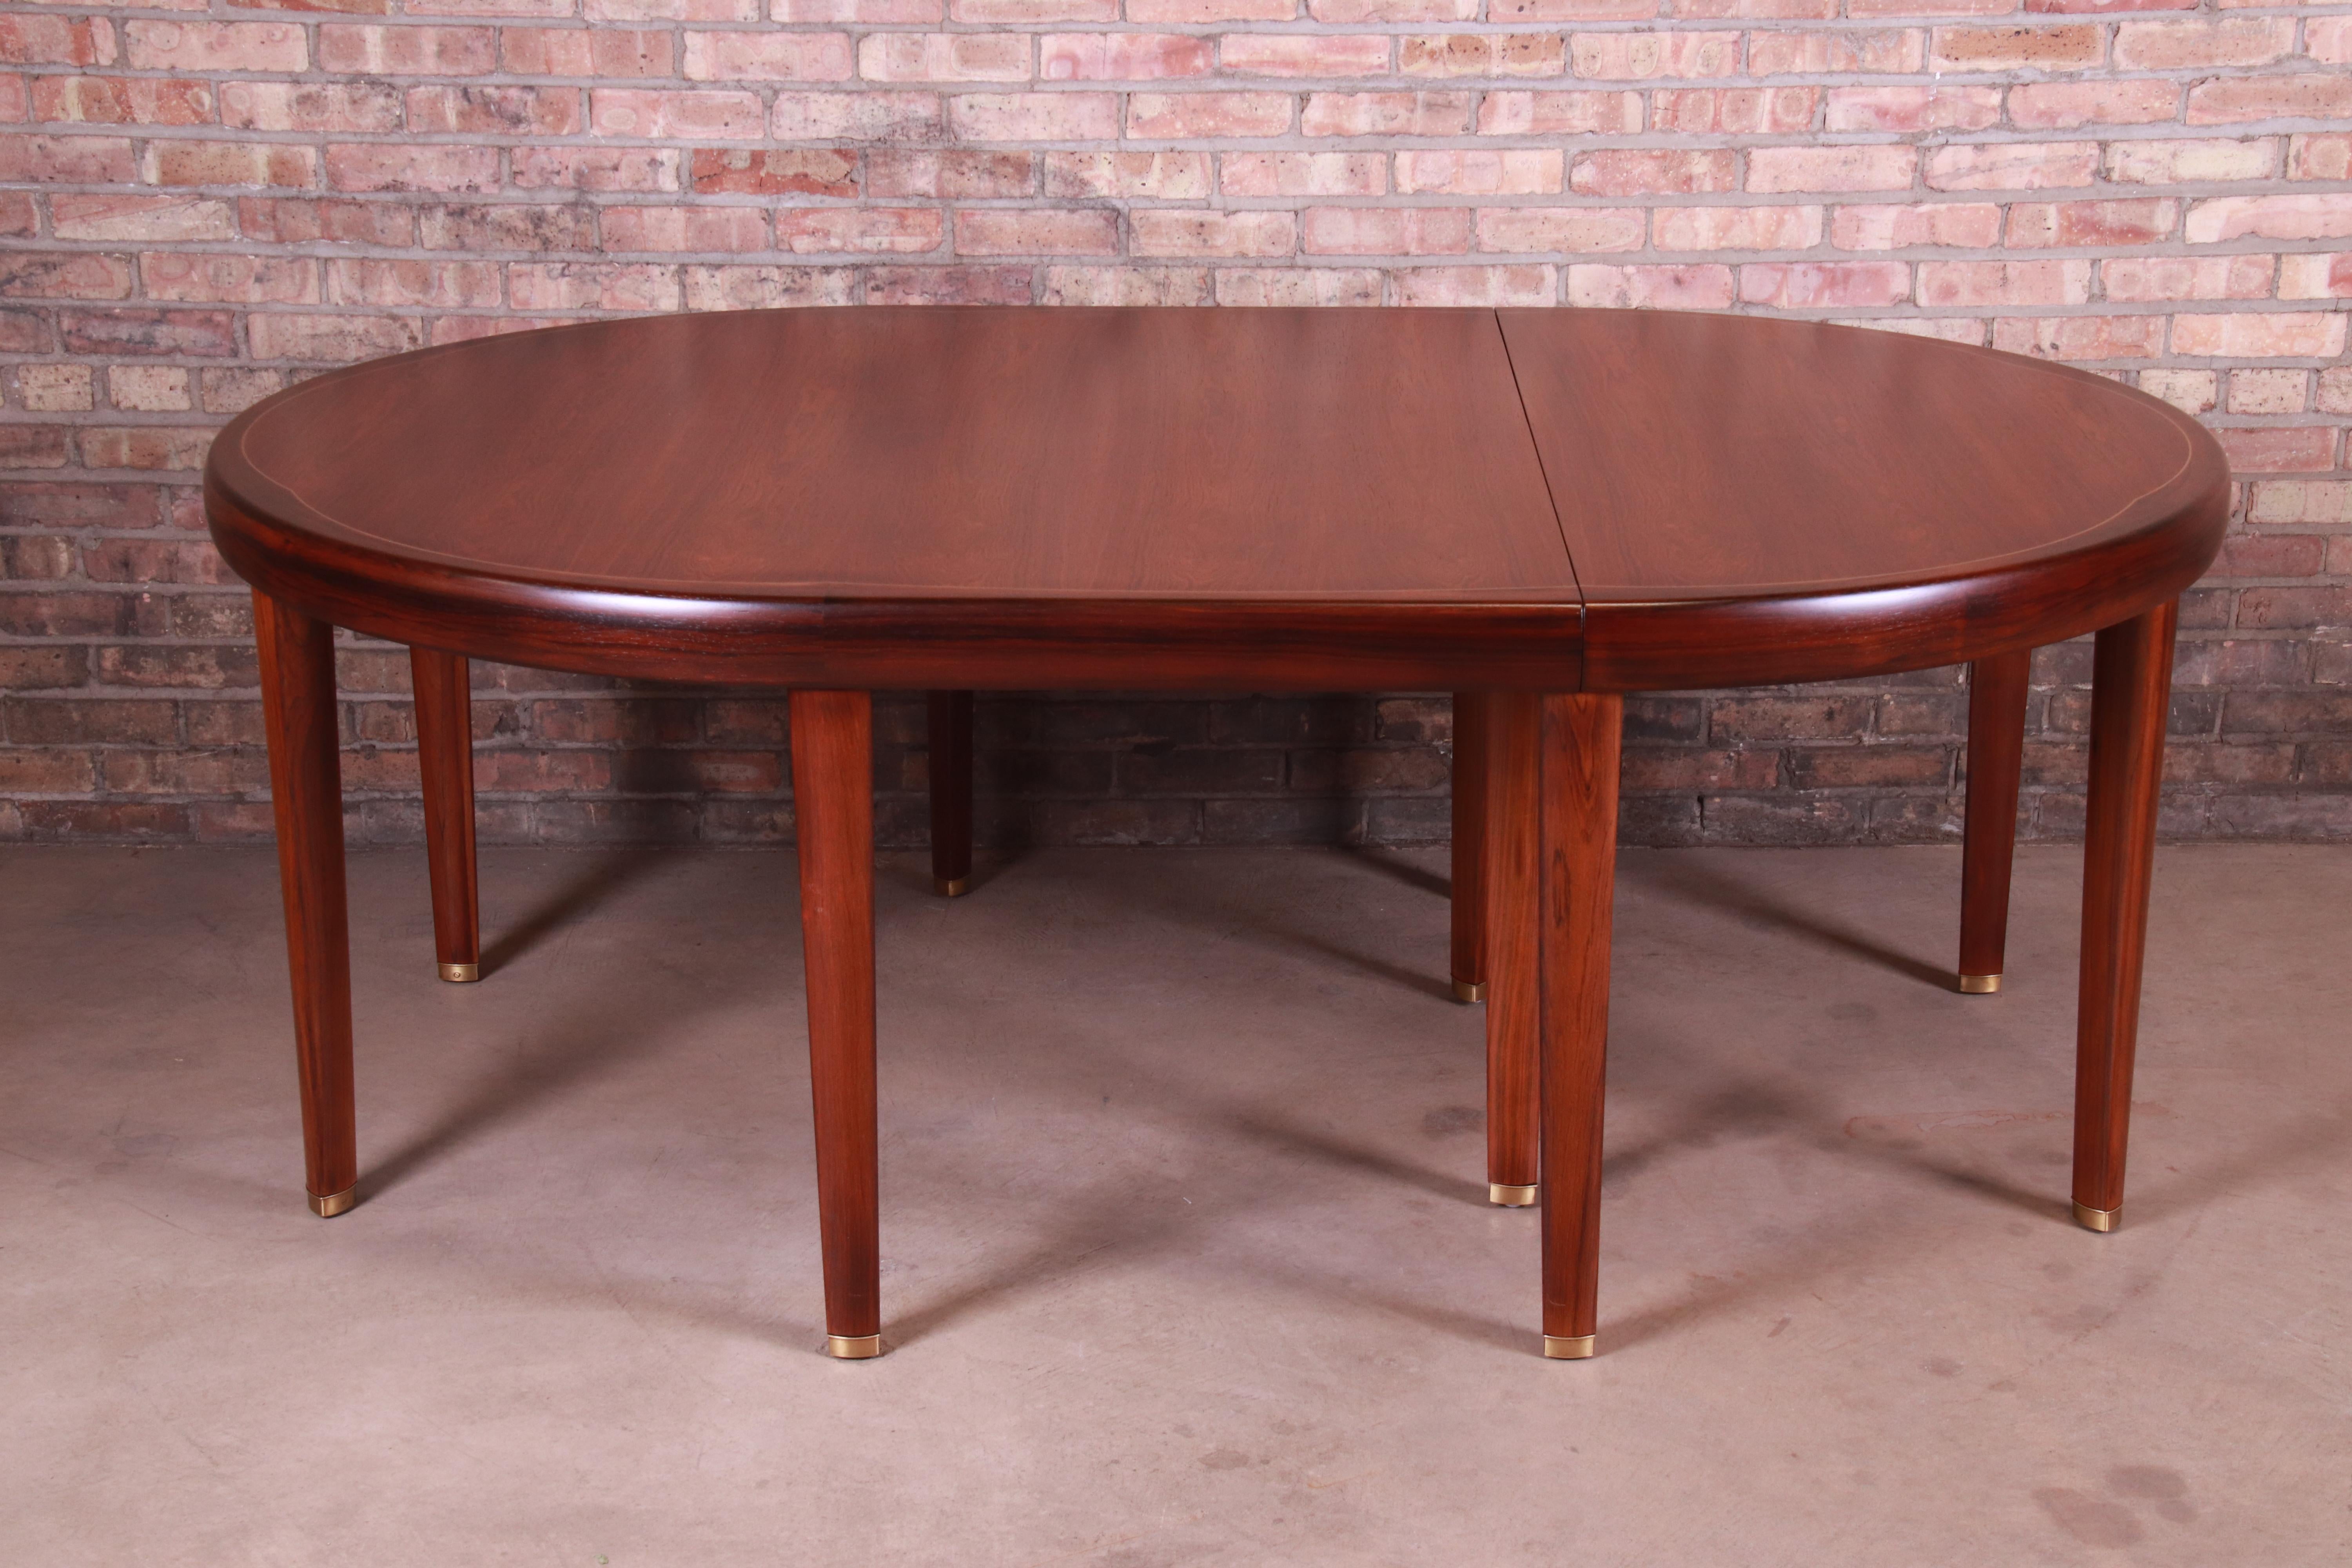 20th Century Agner Christoffersen Style Monumental Danish Rosewood Dining Table, Restored